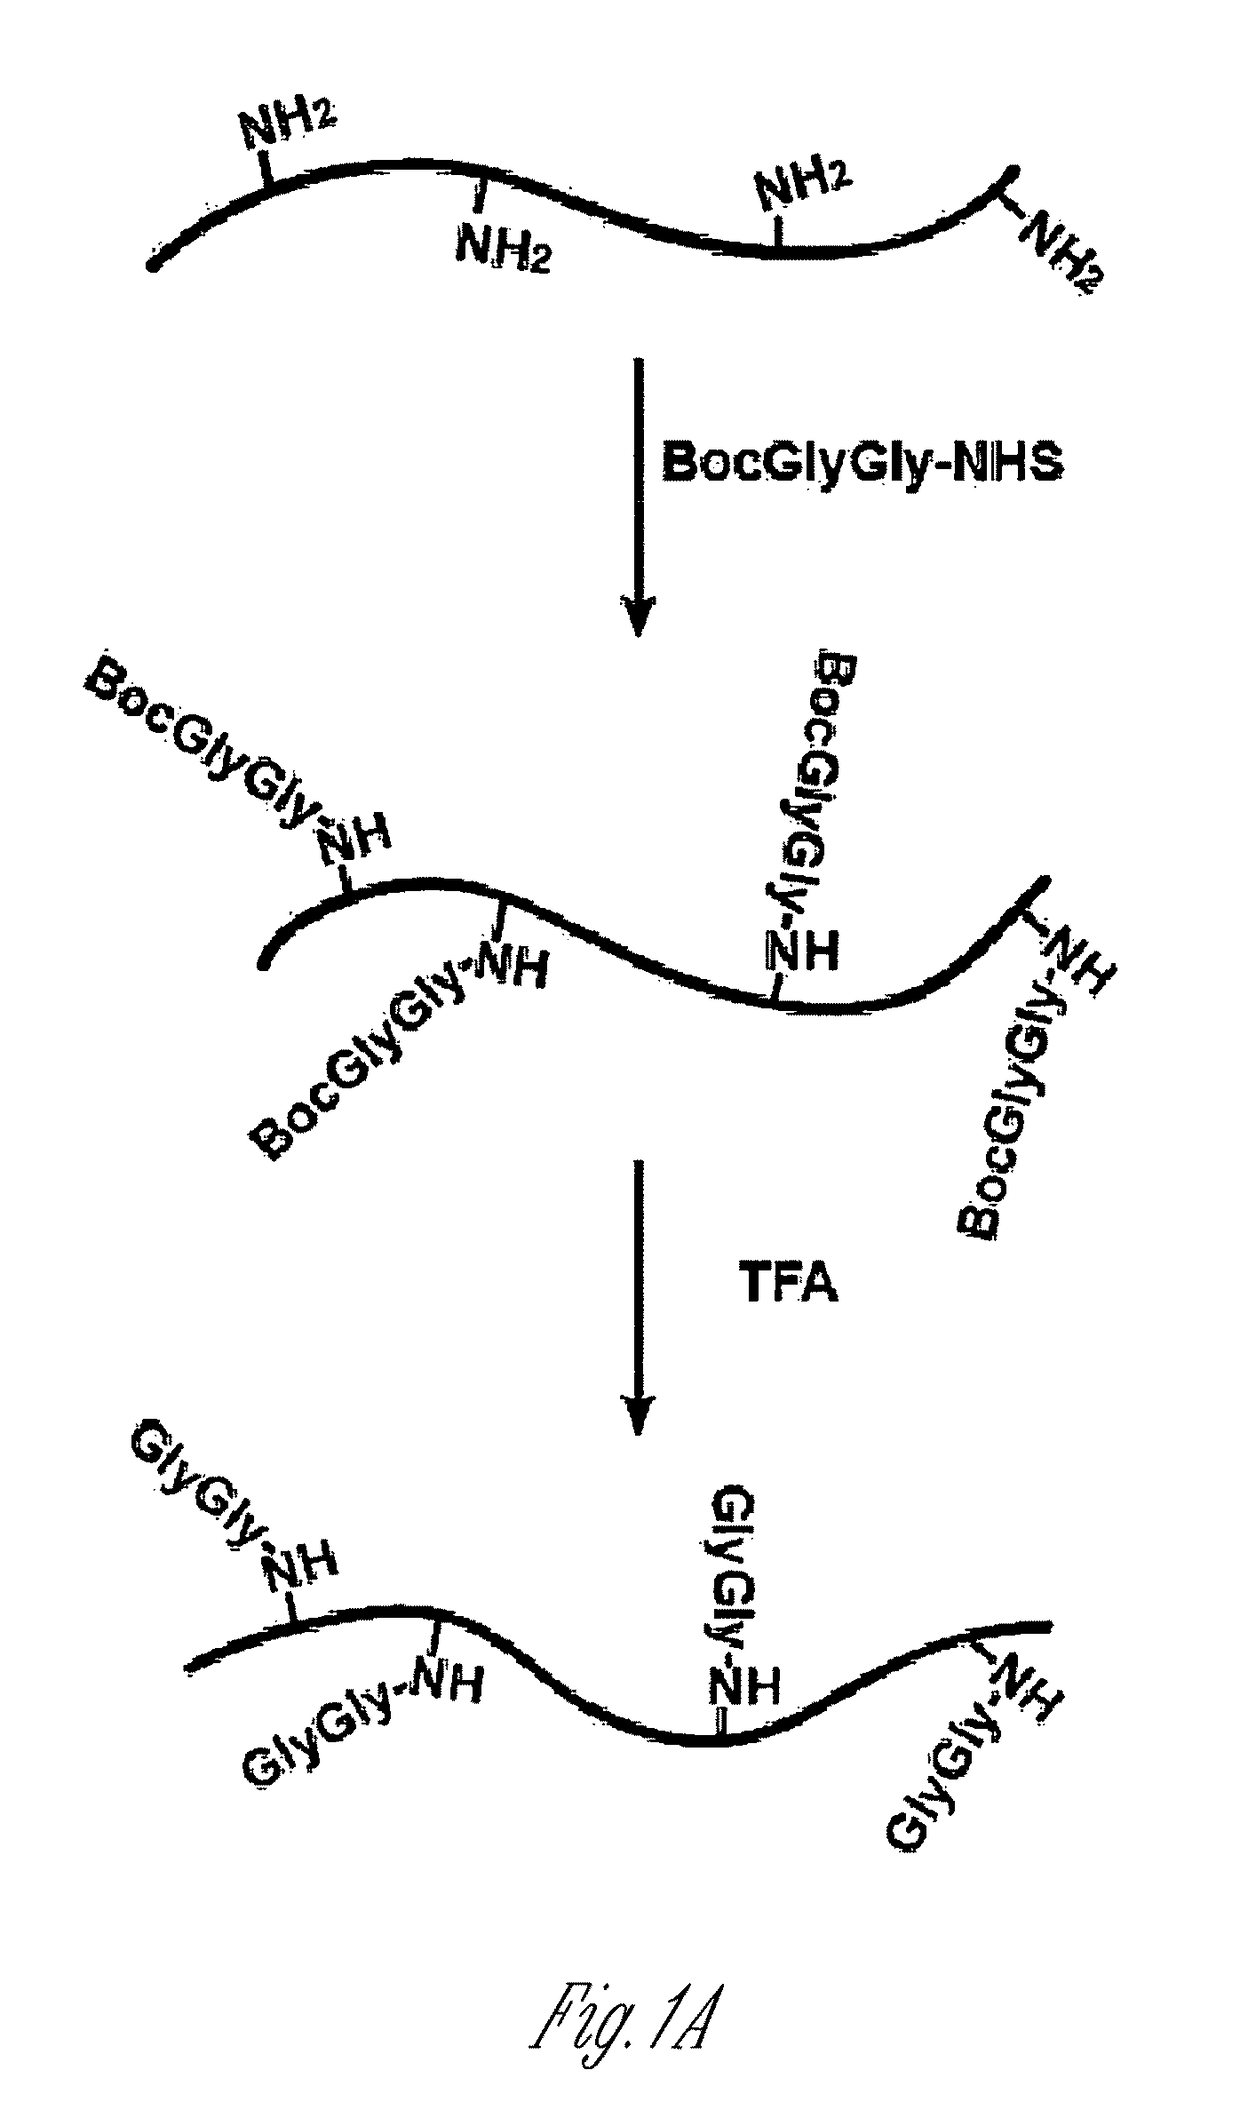 Antibodies for ubiquitinated proteins